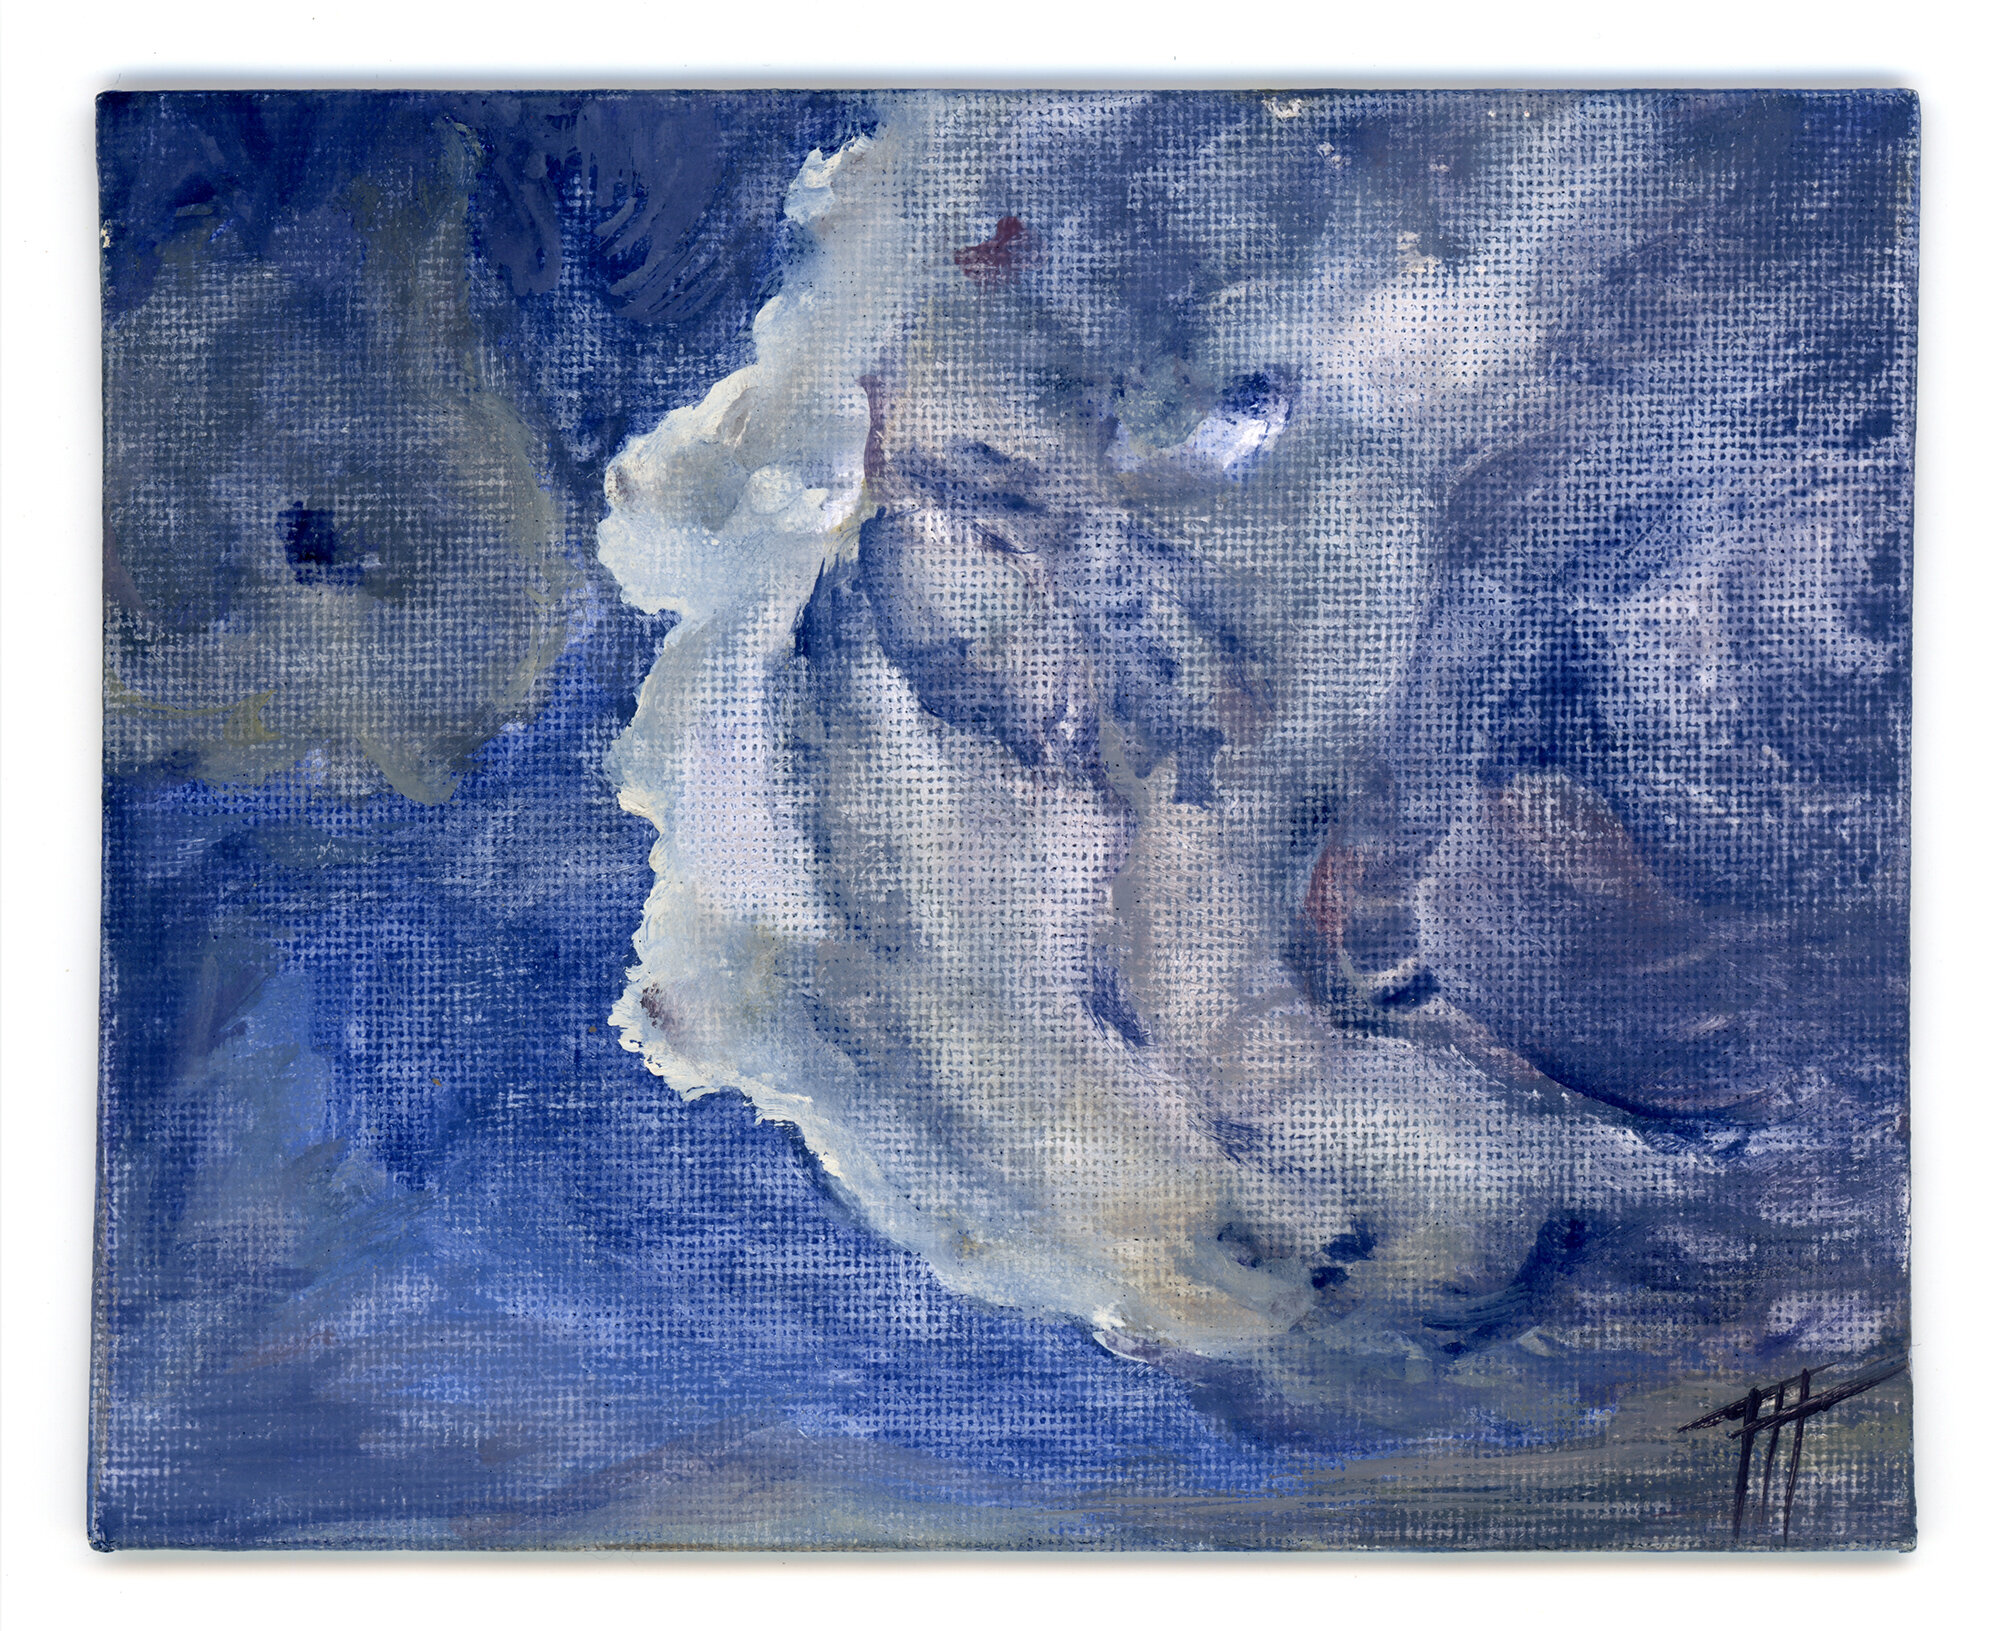  Big Cloud, 2020. 4.75 x 5.9 in. Oil on canvas board. 